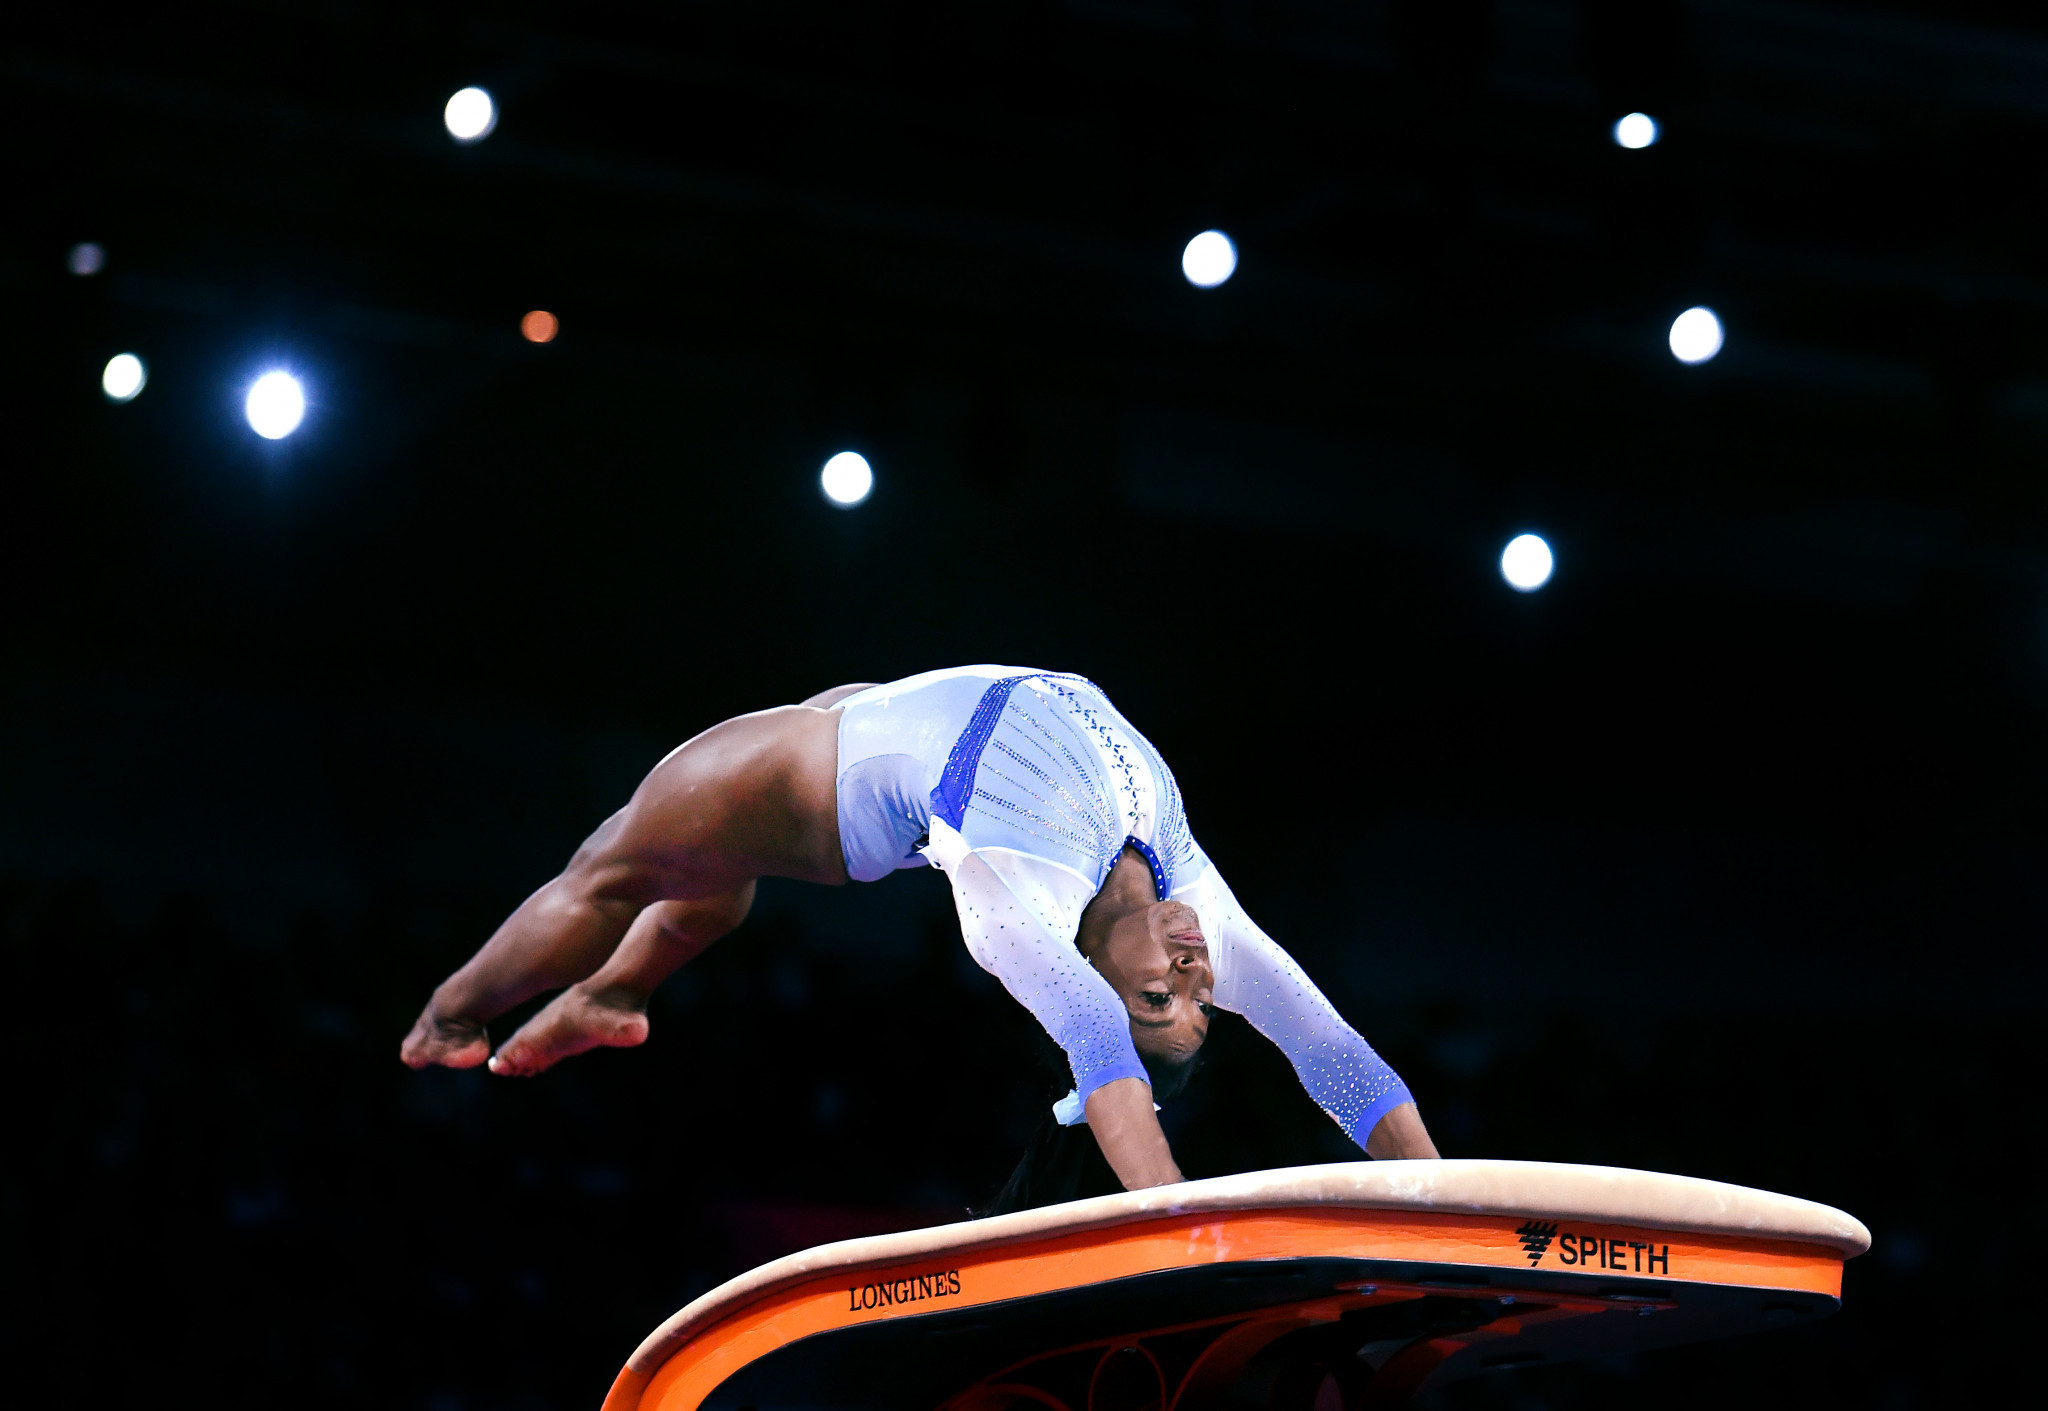 Biles stars in women's all-around qualifying at Artistic Gymnastics World Championships